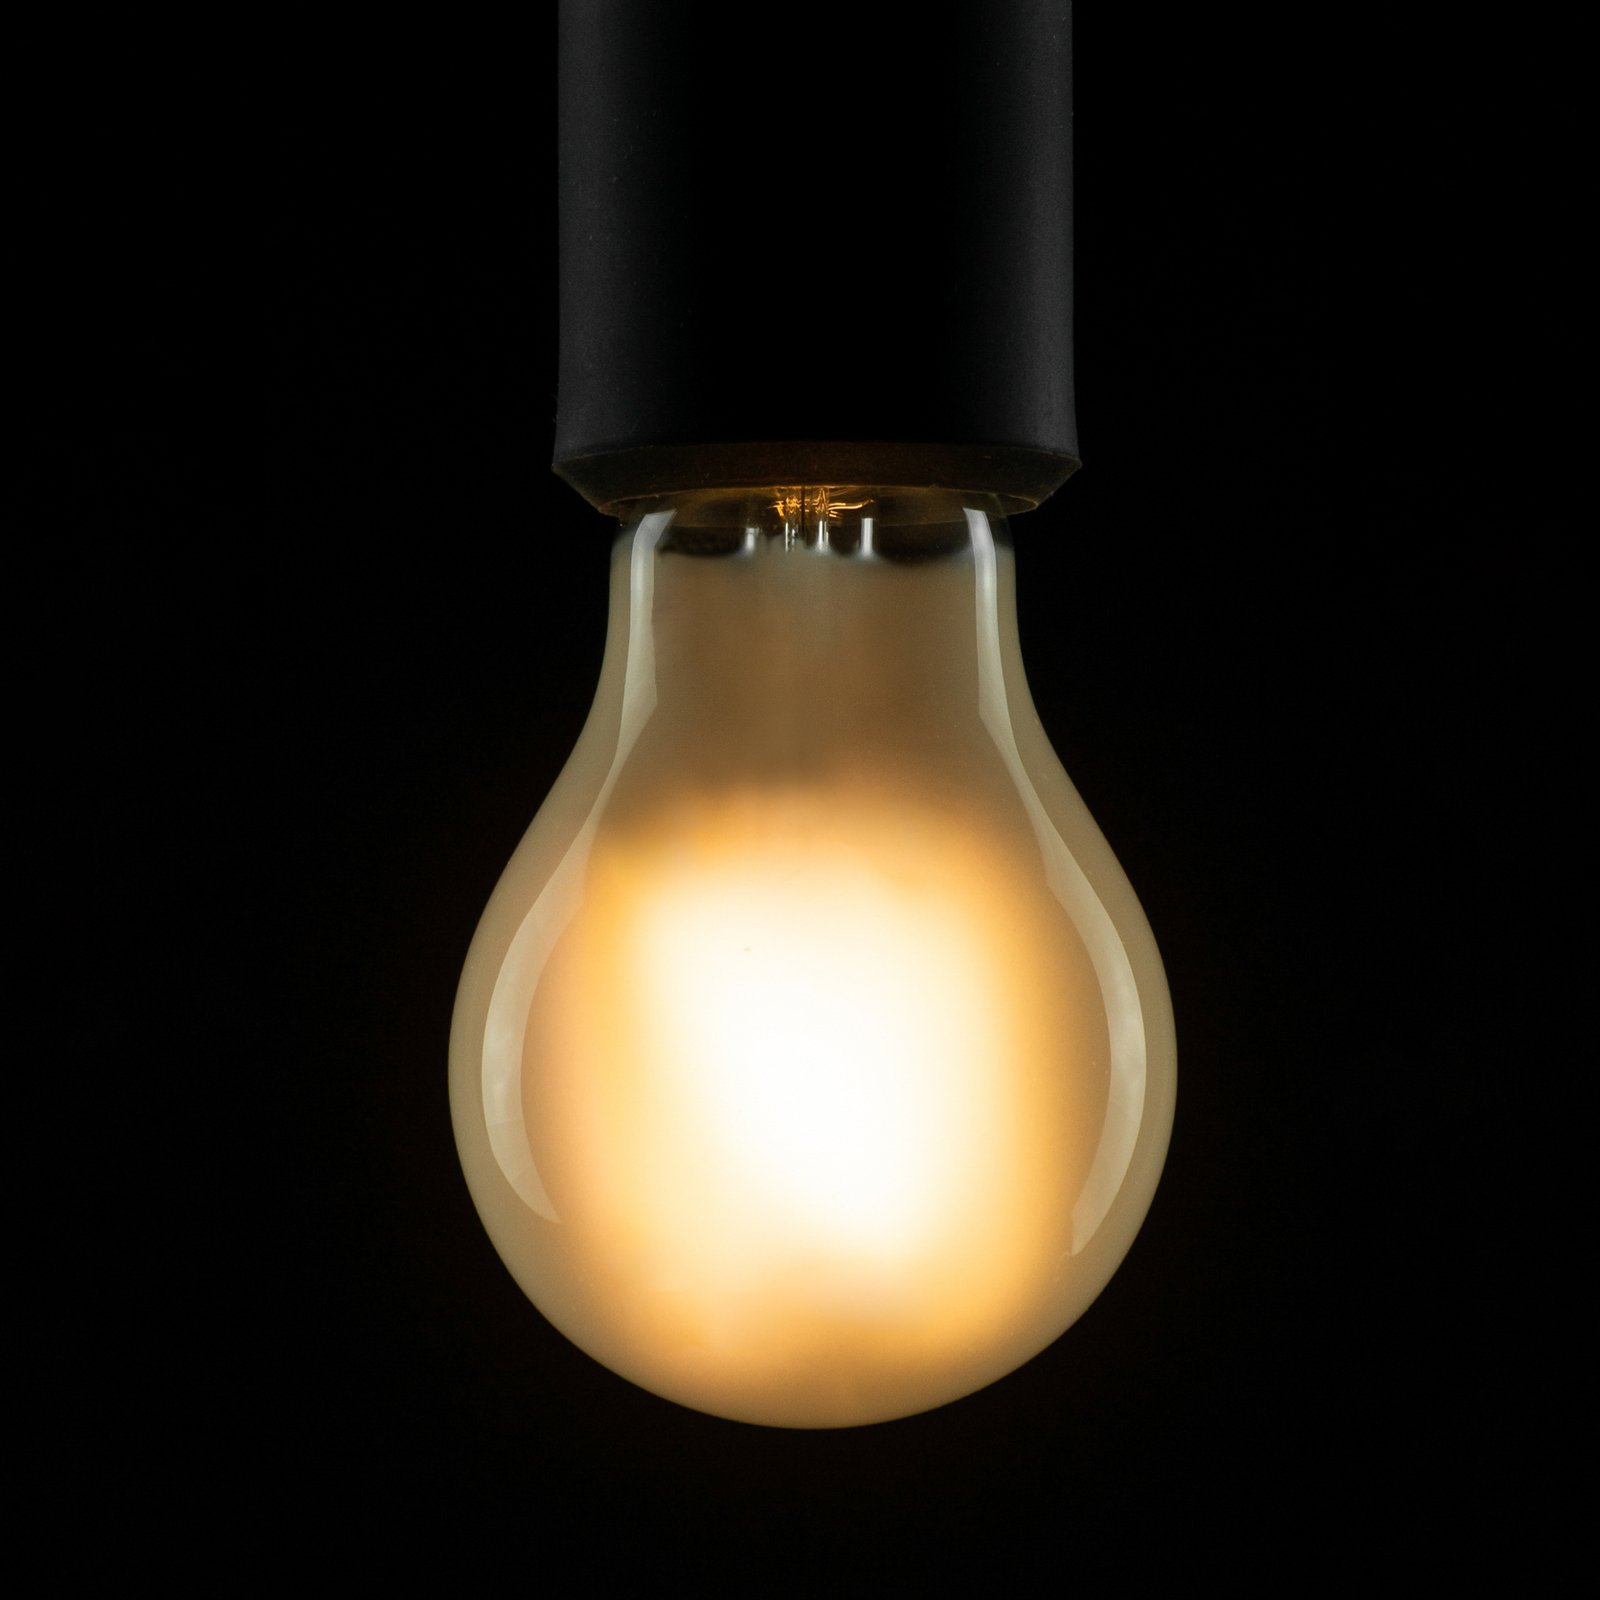 SEGULA ampoule LED E27 3,2W 927 dimmable mate